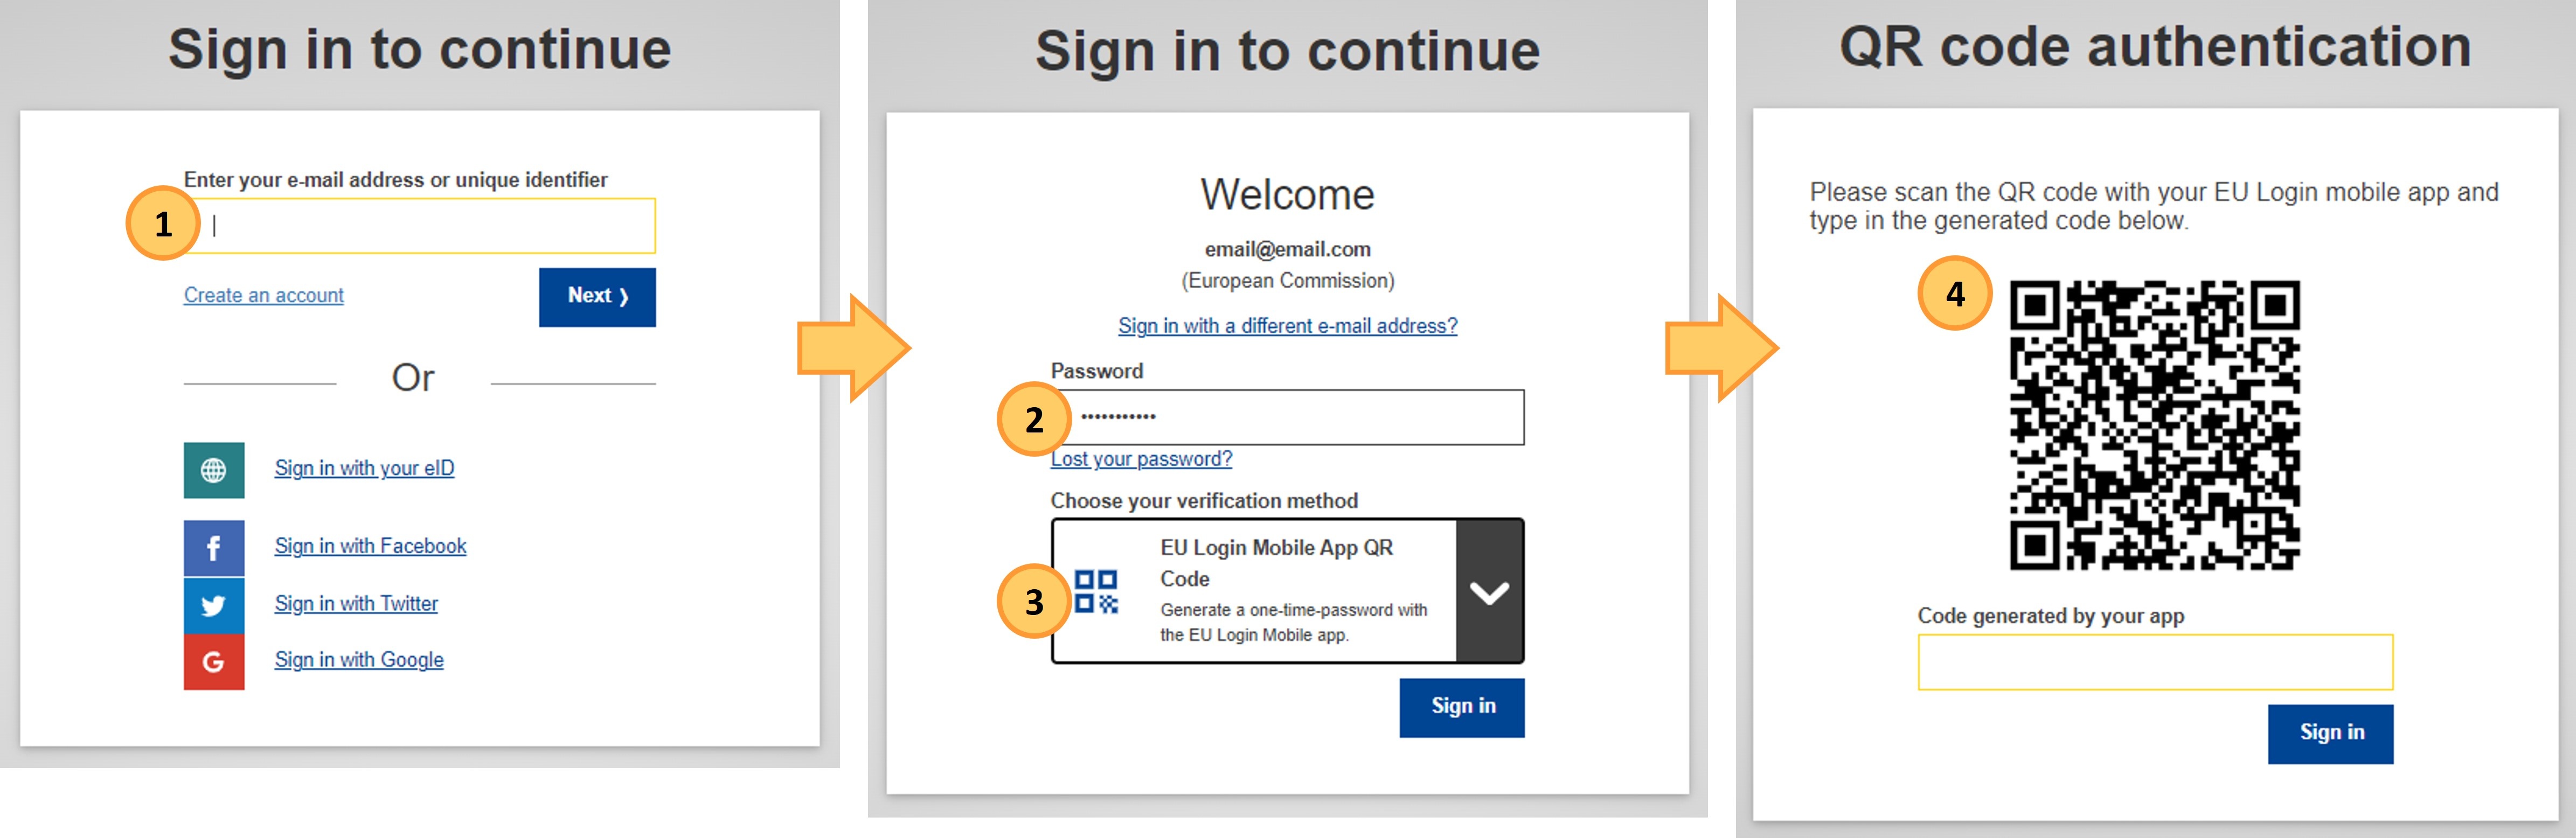 Sign in with an EU Login account using the EU Login Mobile App QR code